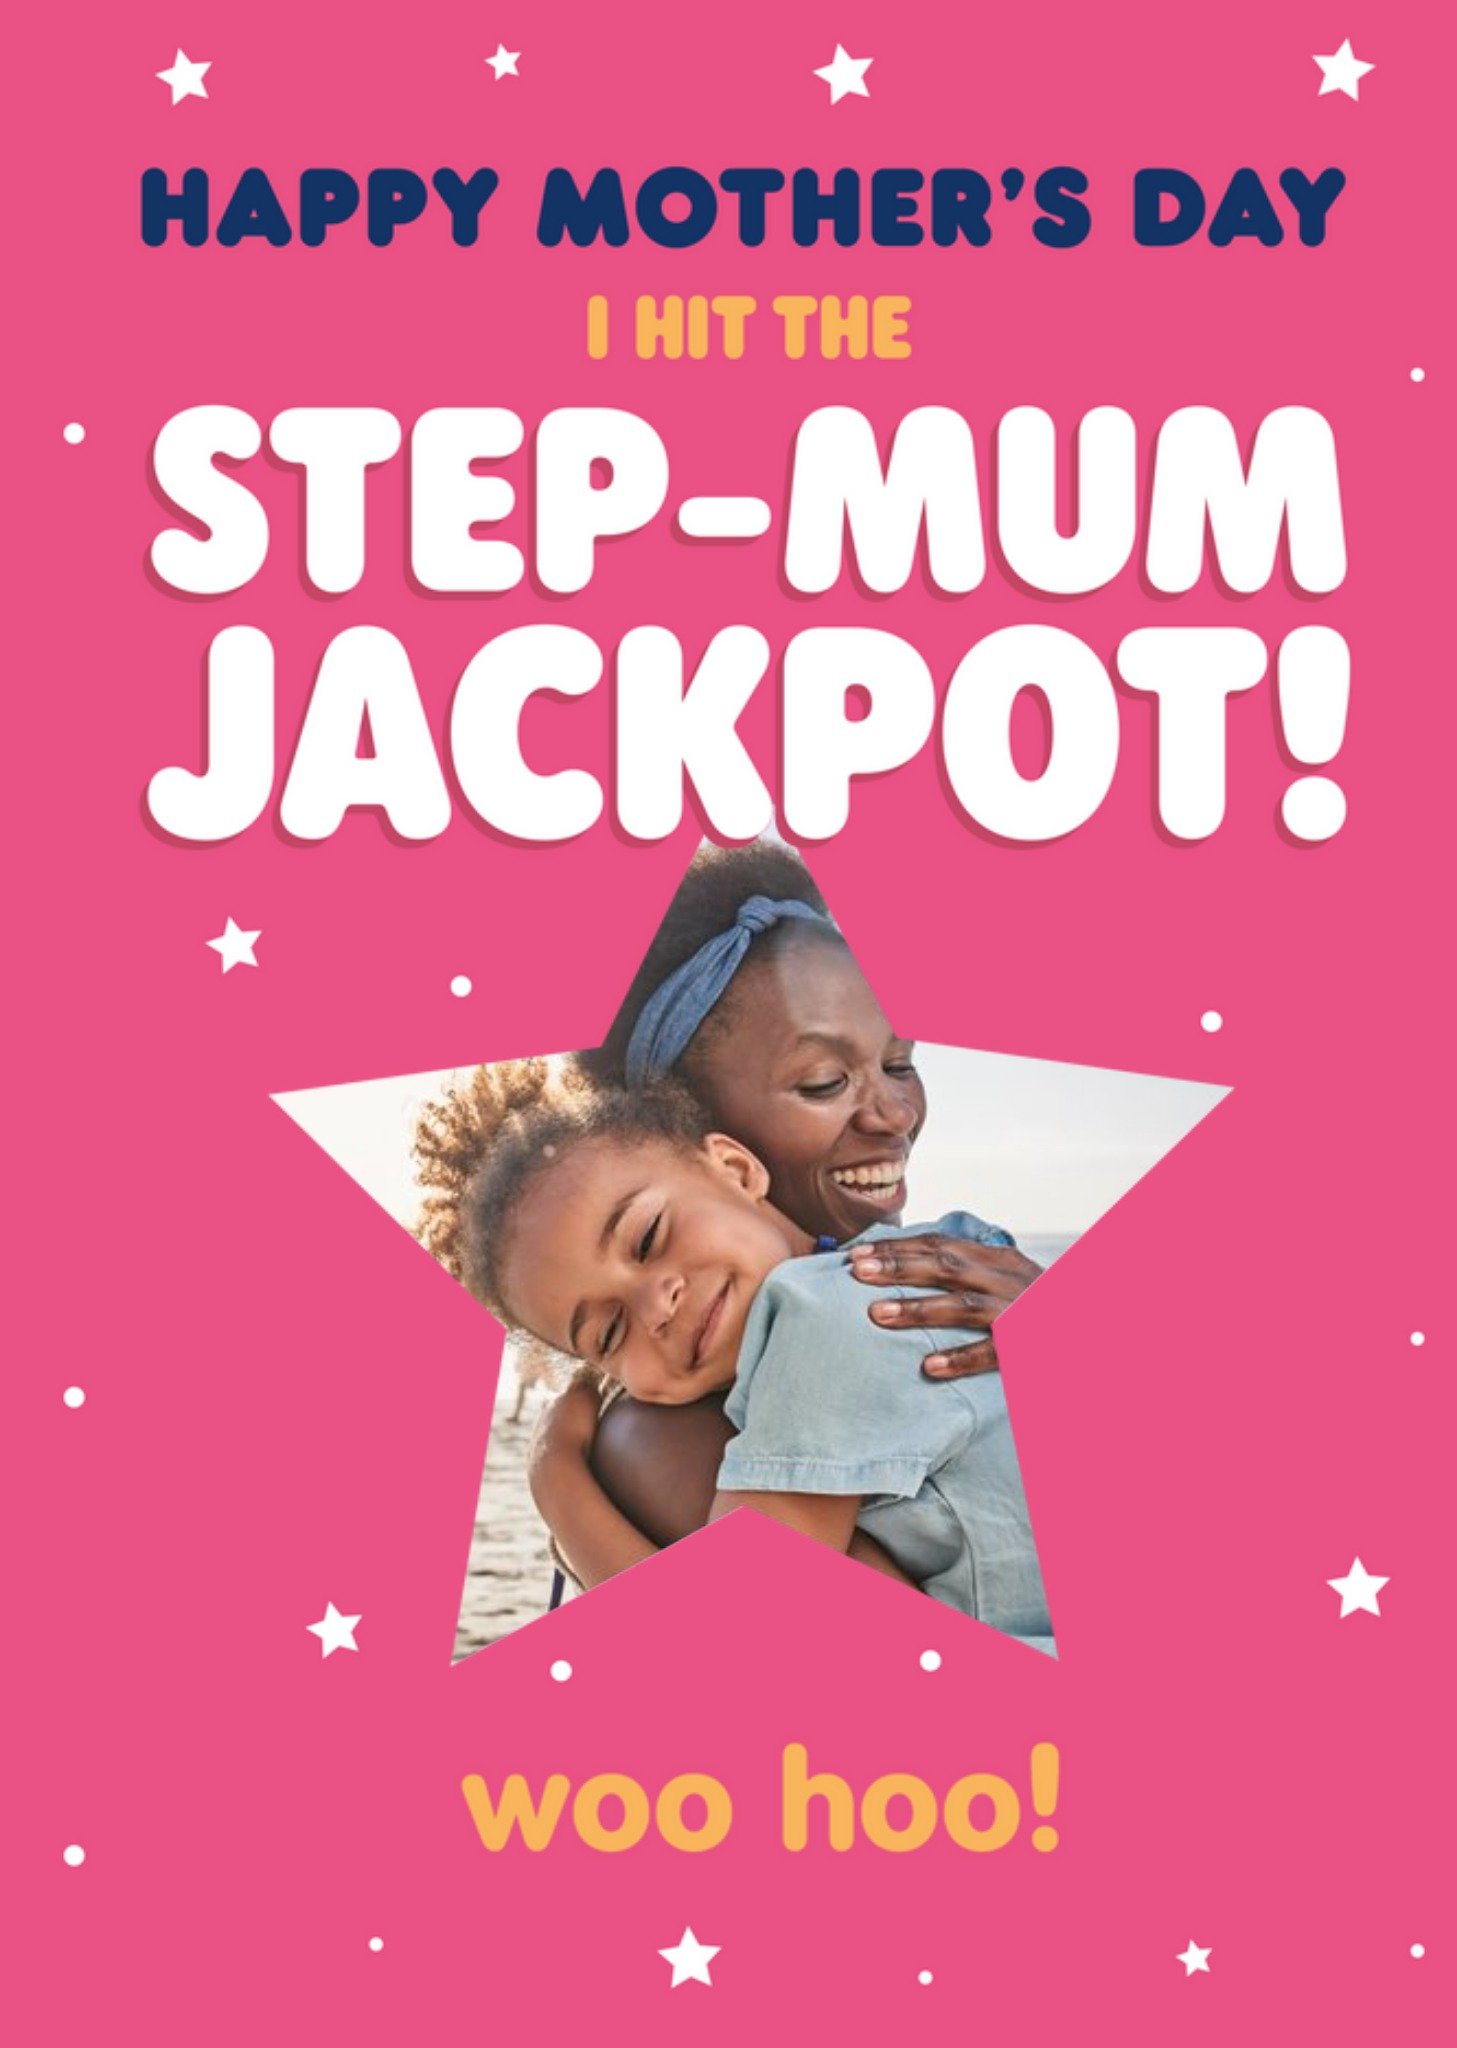 Moonpig Star Shaped Photo Upload Step-Mum Jackpot Mother's Day Card Ecard